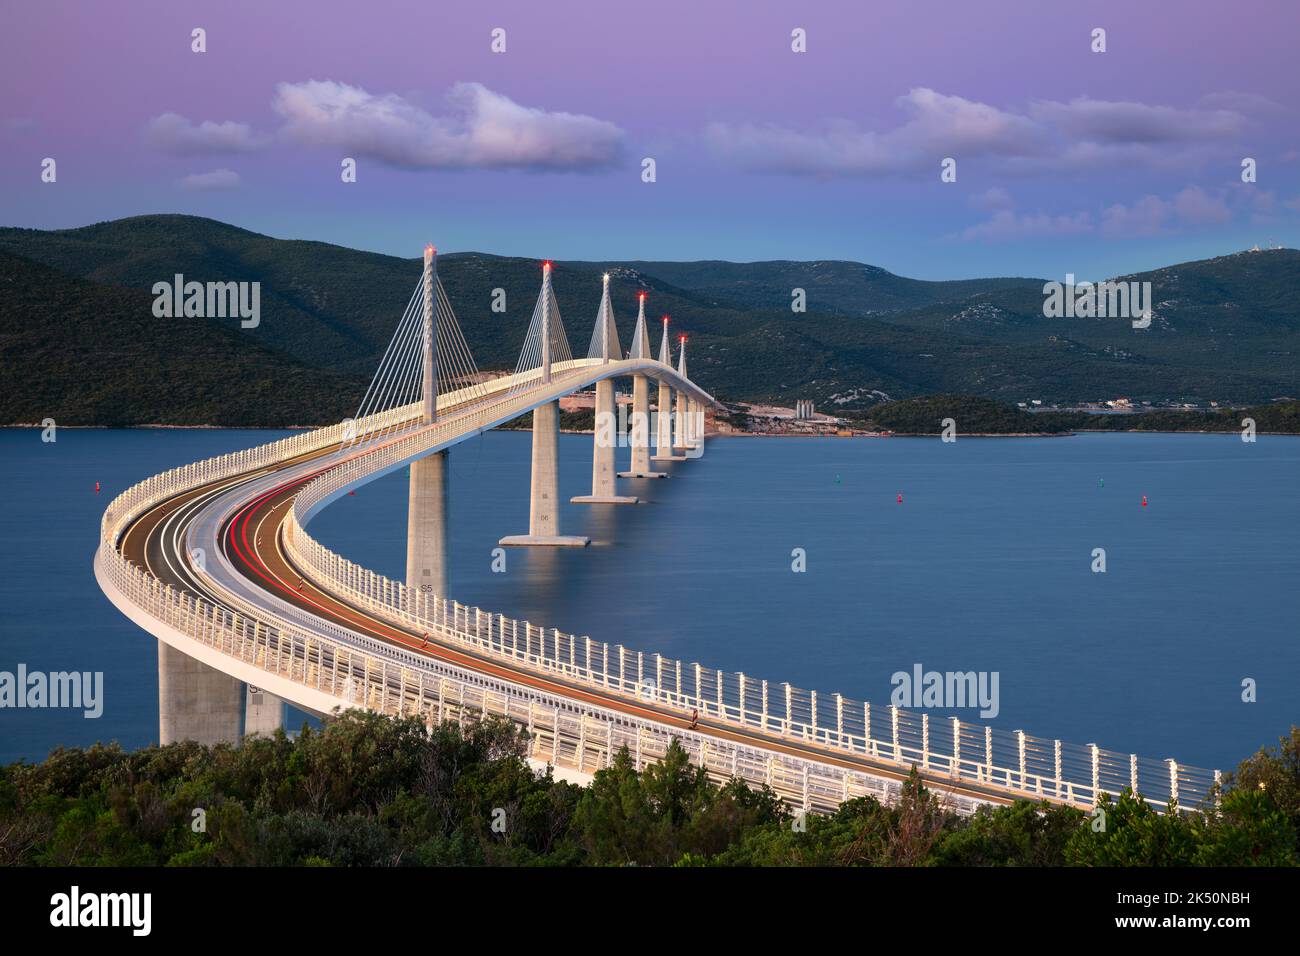 Peljesac Bridge, Croatia. Image of beautiful modern multi-span cable-stayed Peljesac Bridge over the sea in Dubrovnik-Neretva County, Croatia at sunri Stock Photo